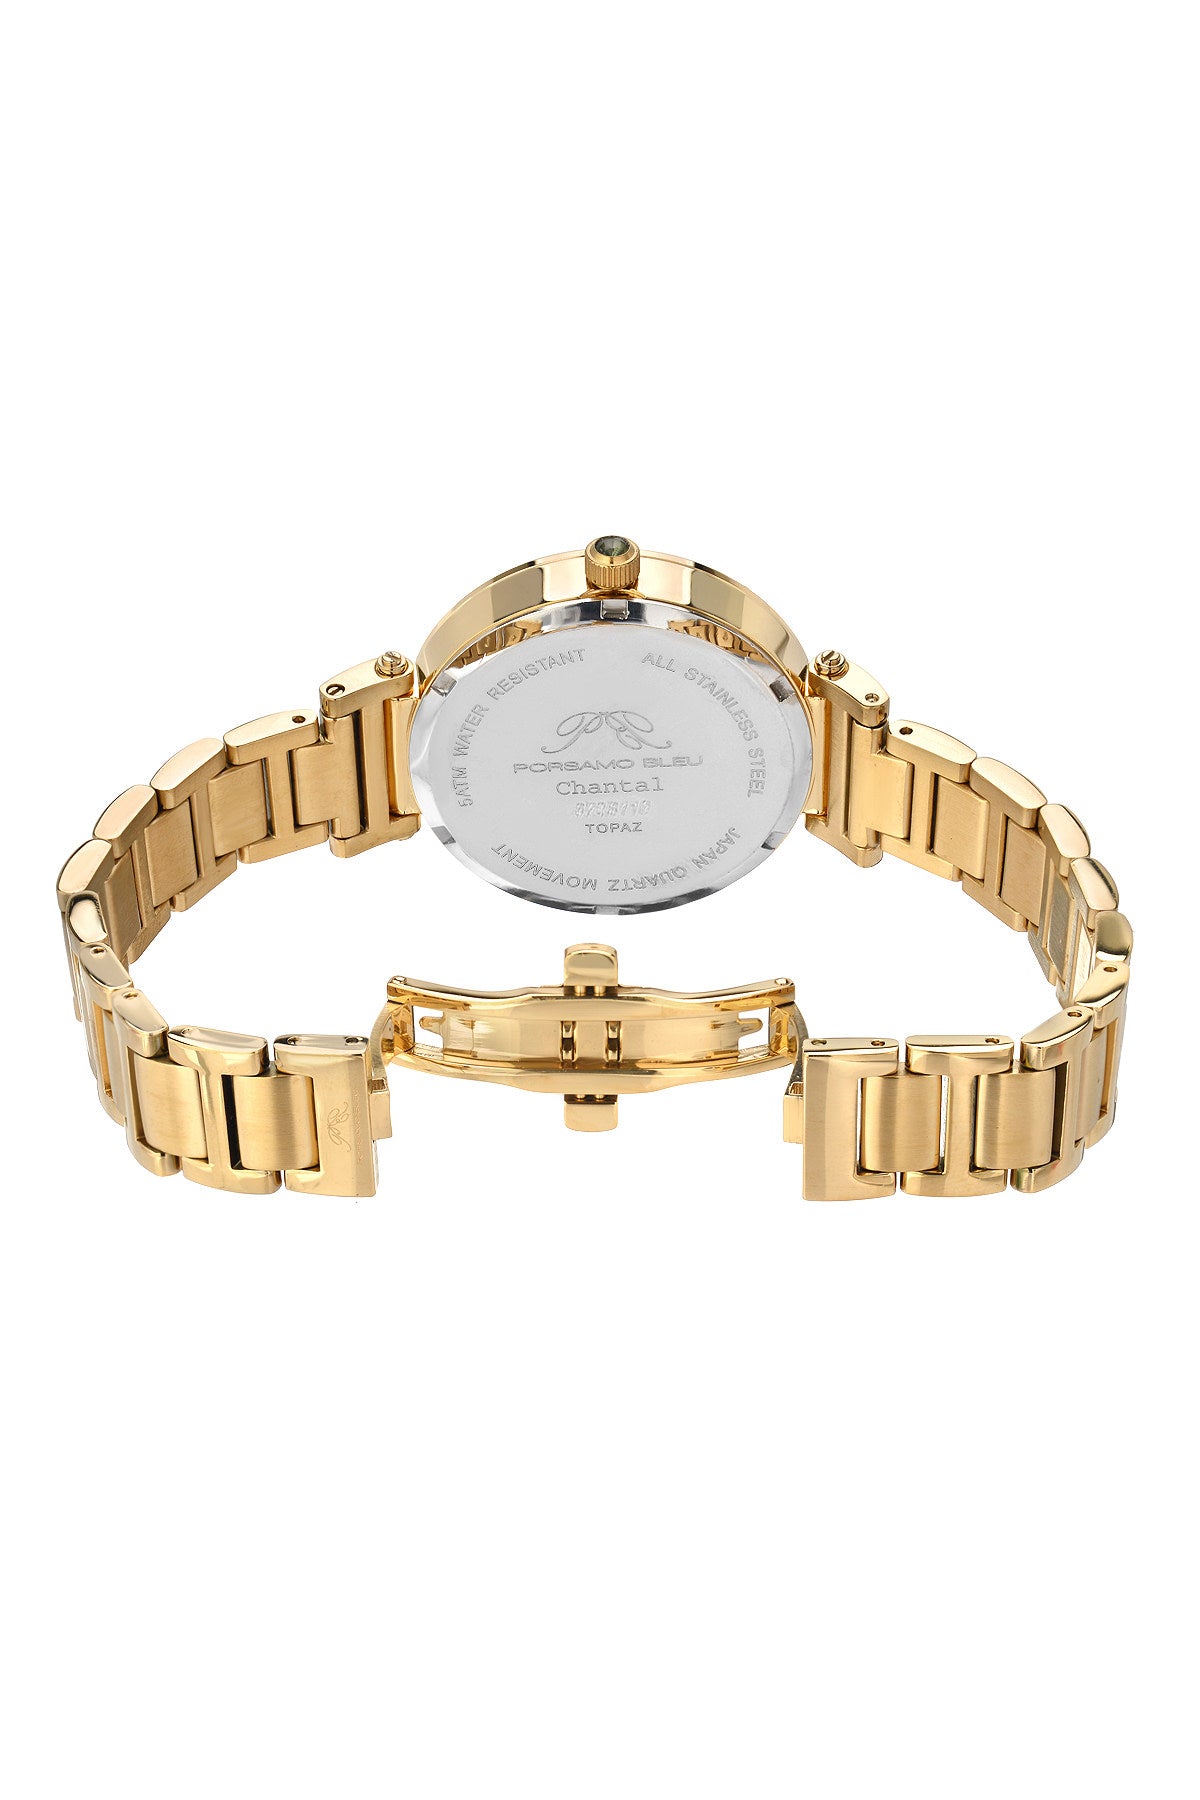 Porsamo Bleu Chantal luxury topaz women's stainless steel watch, gold, black 672BCHS